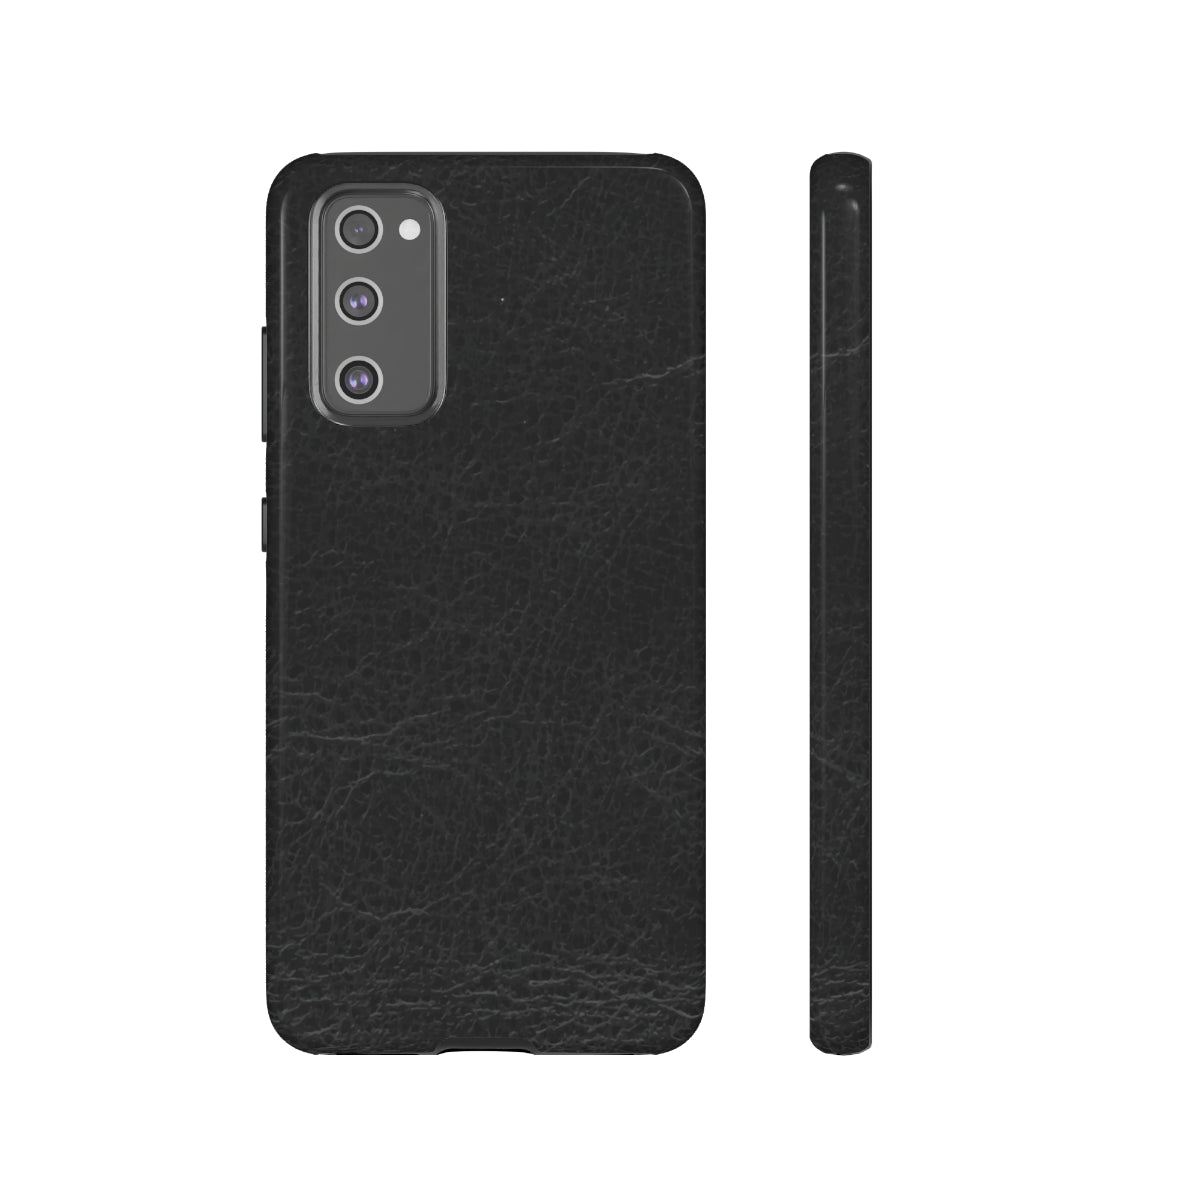 LEATHERTONE [Black] Tough Cases - Samsung S20 FE / Glossy